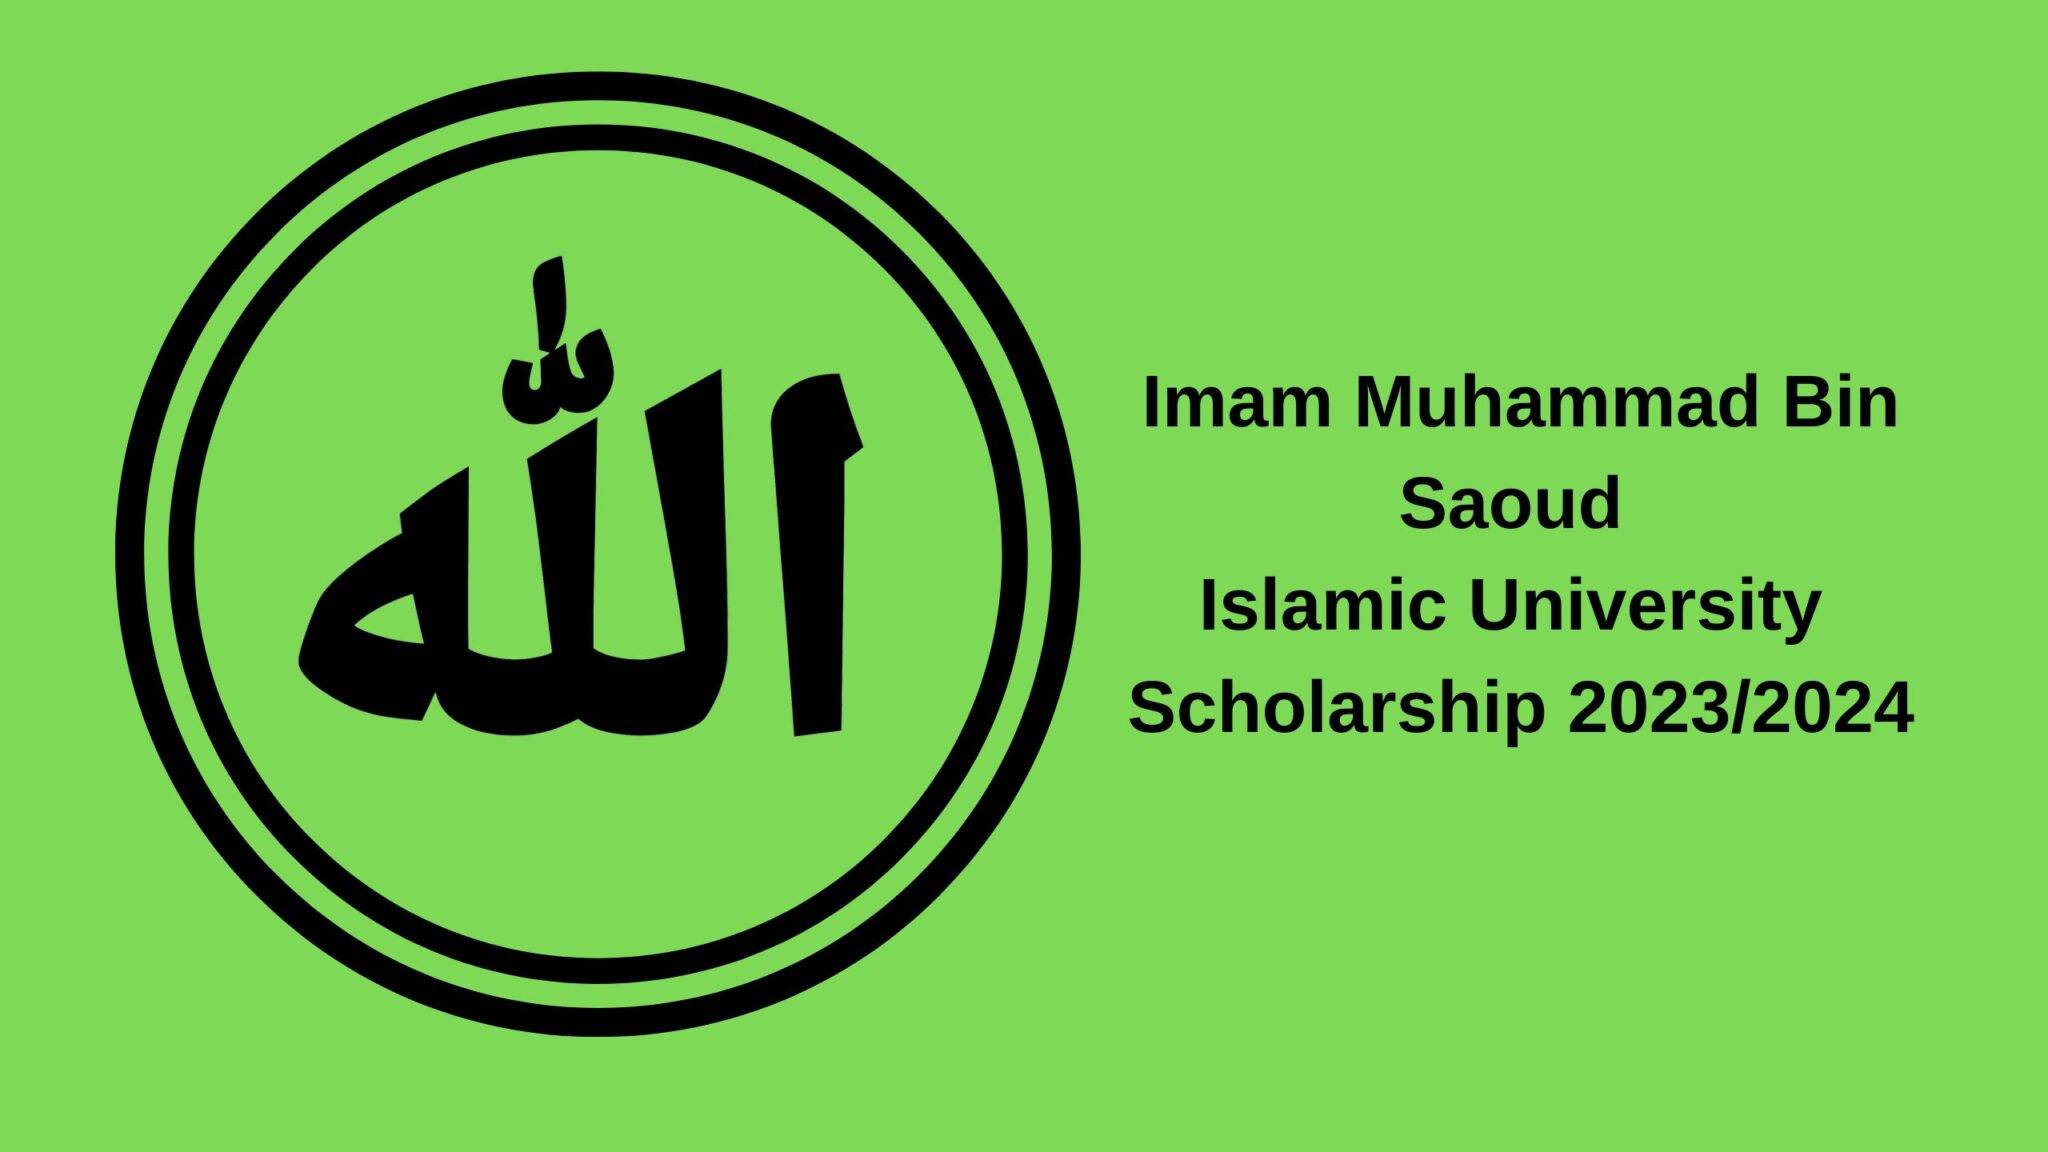 Imam Muhammad Bin Saoud Islamic University Scholarship 2023/2024